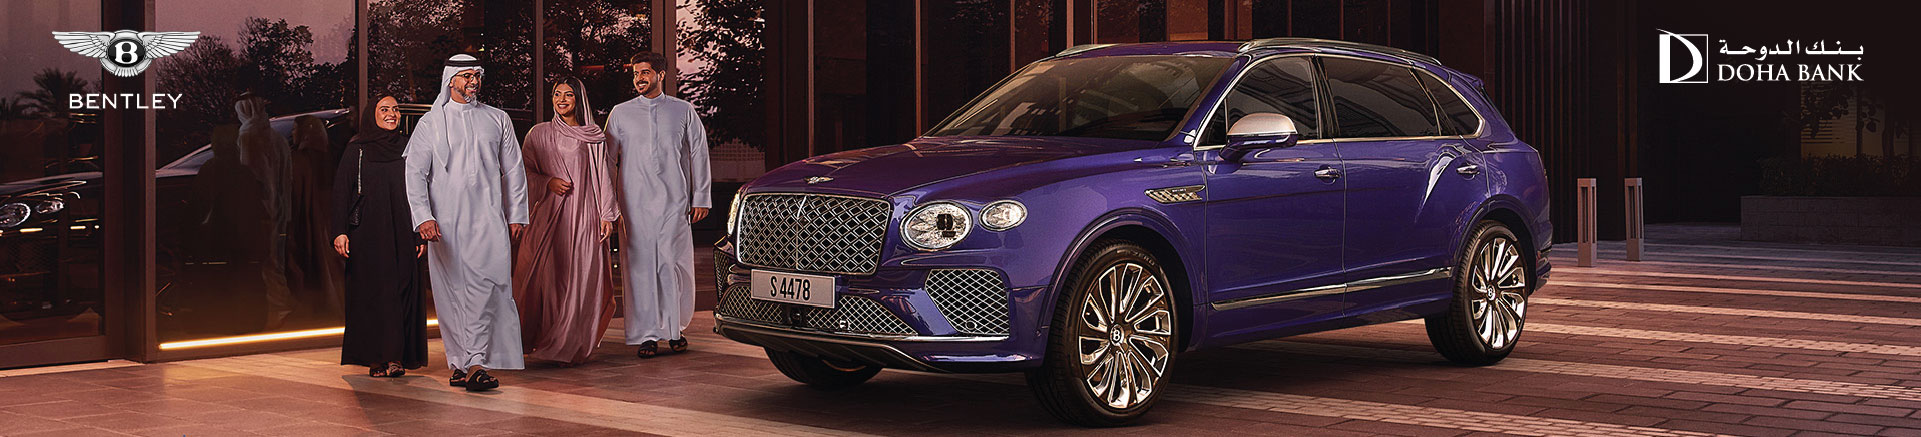 Bentley Car Loan Promotion